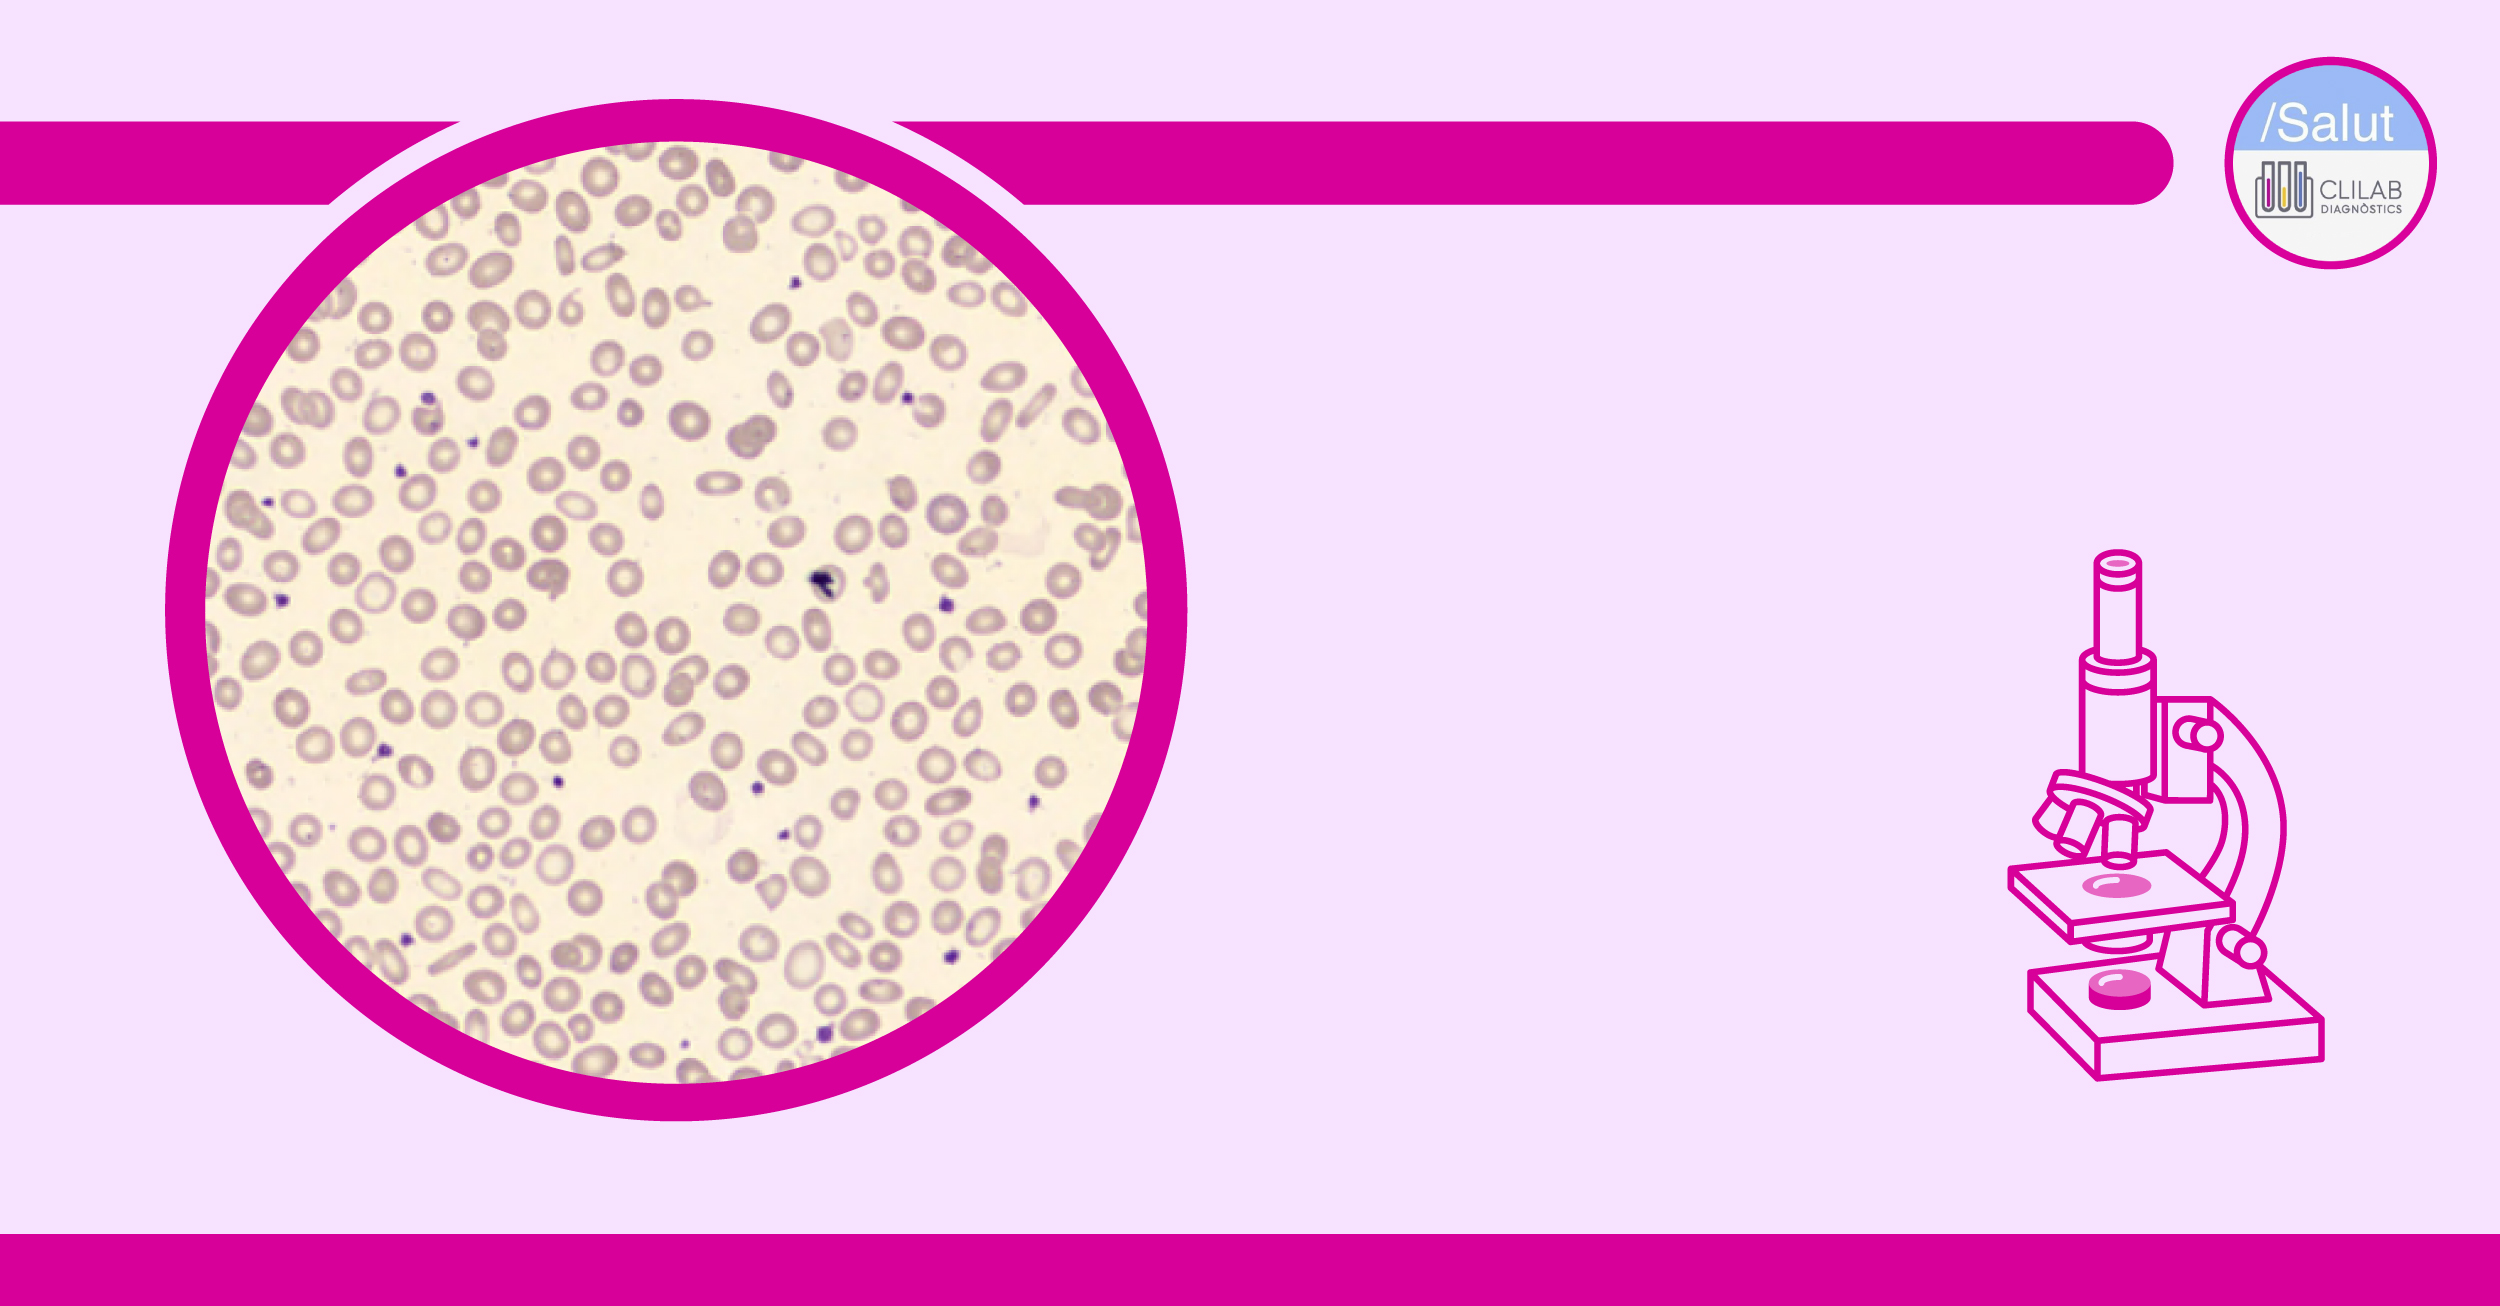 Frotis de sangre periférica que muestra anisocitosis con microcitosis, hipocromía y eliptocitos